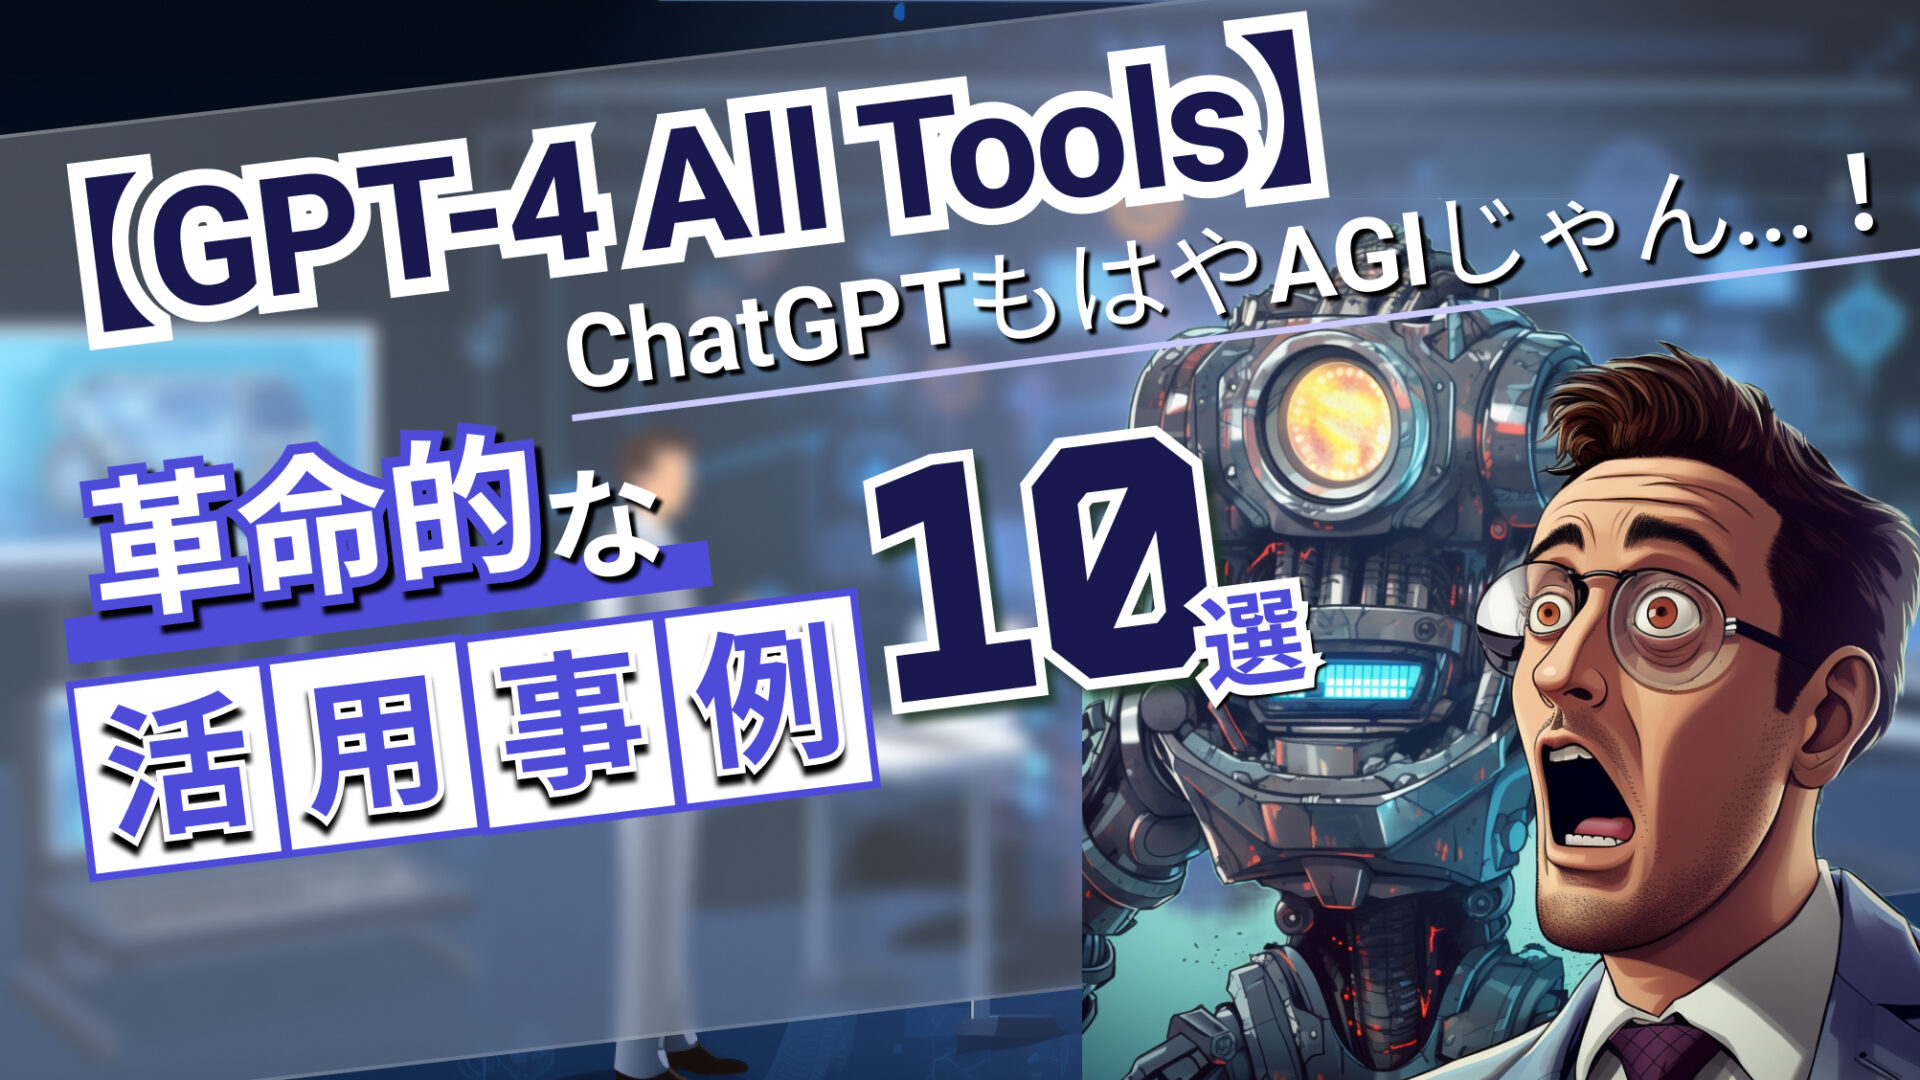 GPT-4 All Tools ChatGPT AGI 活用事例